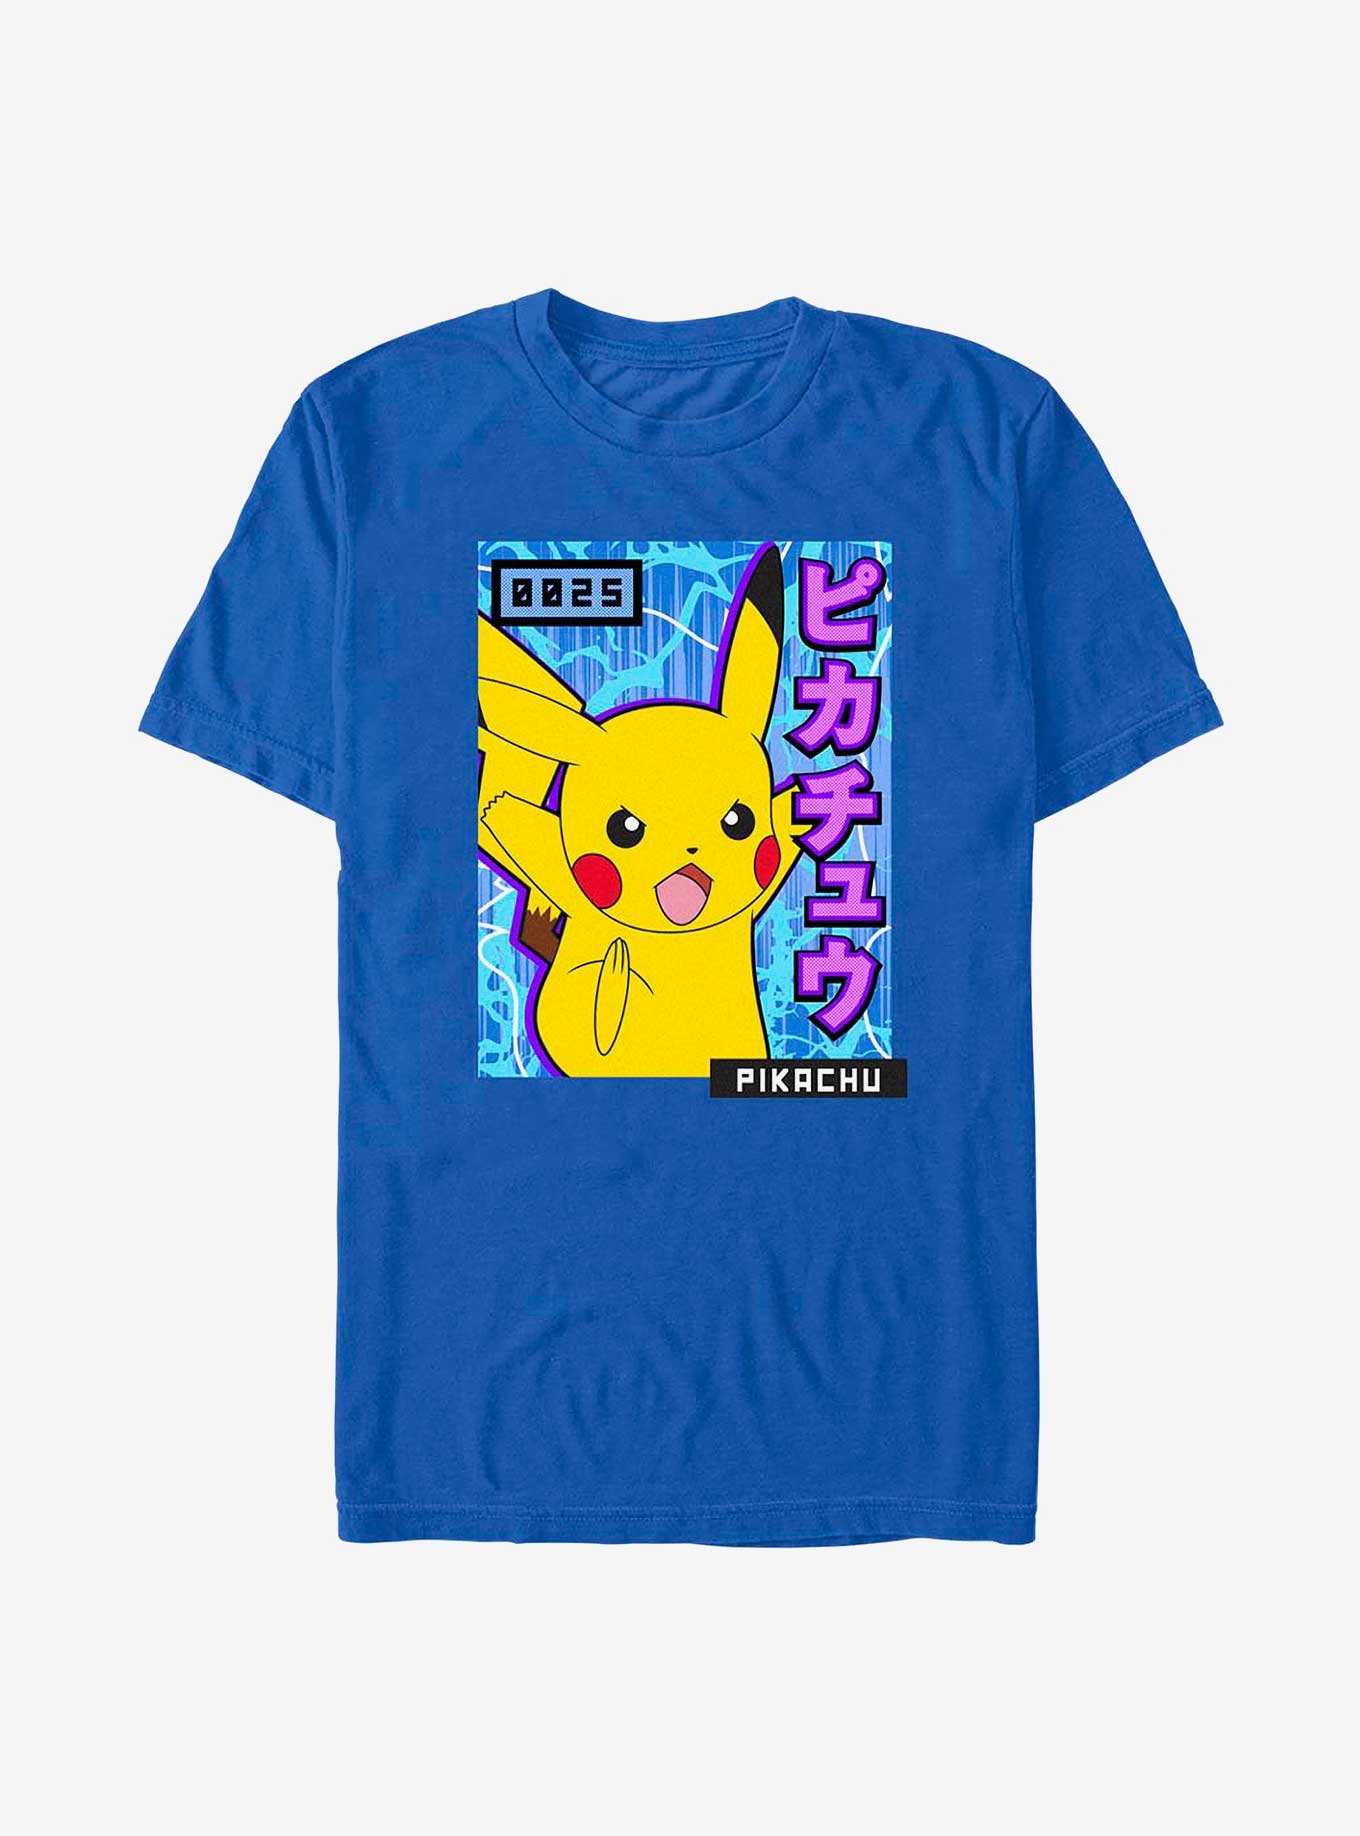 Pokemon Pikachu Bolt T-Shirt, , hi-res